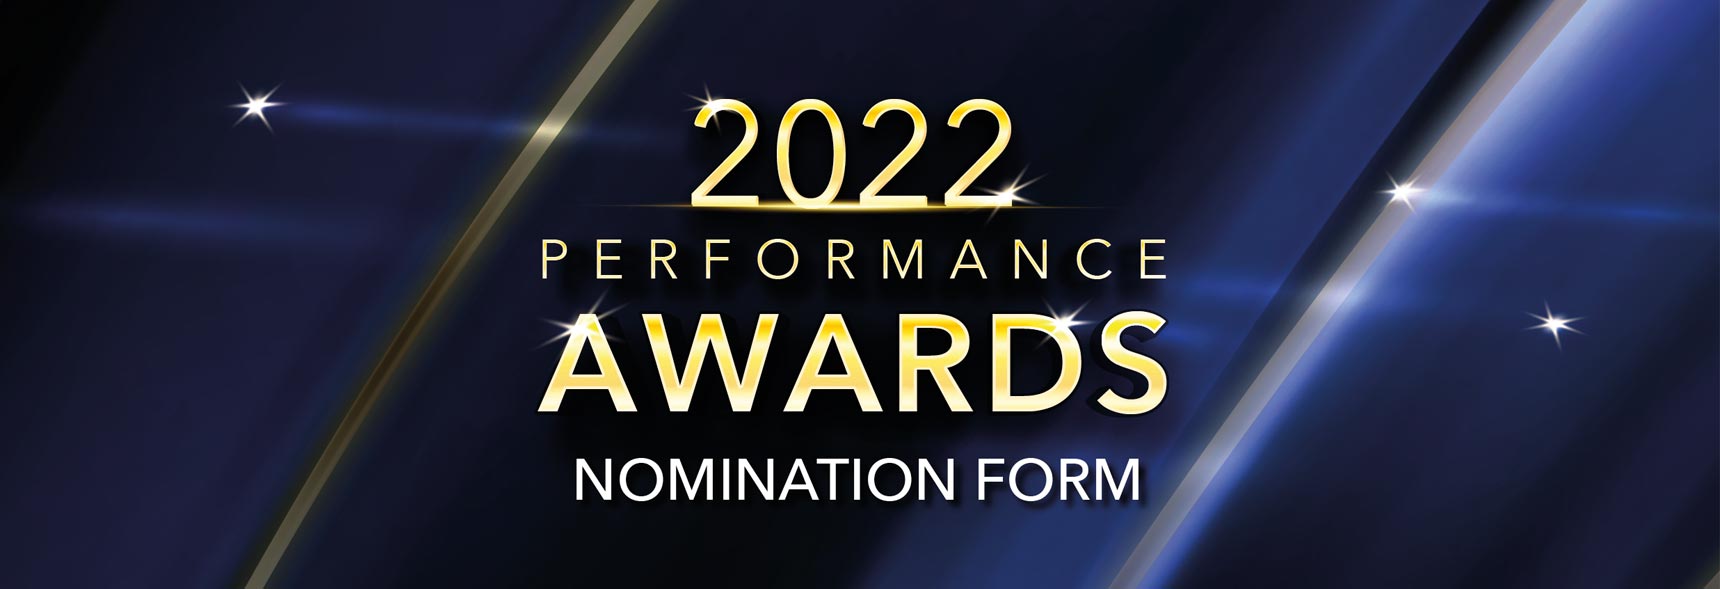 2022 Performance Awards